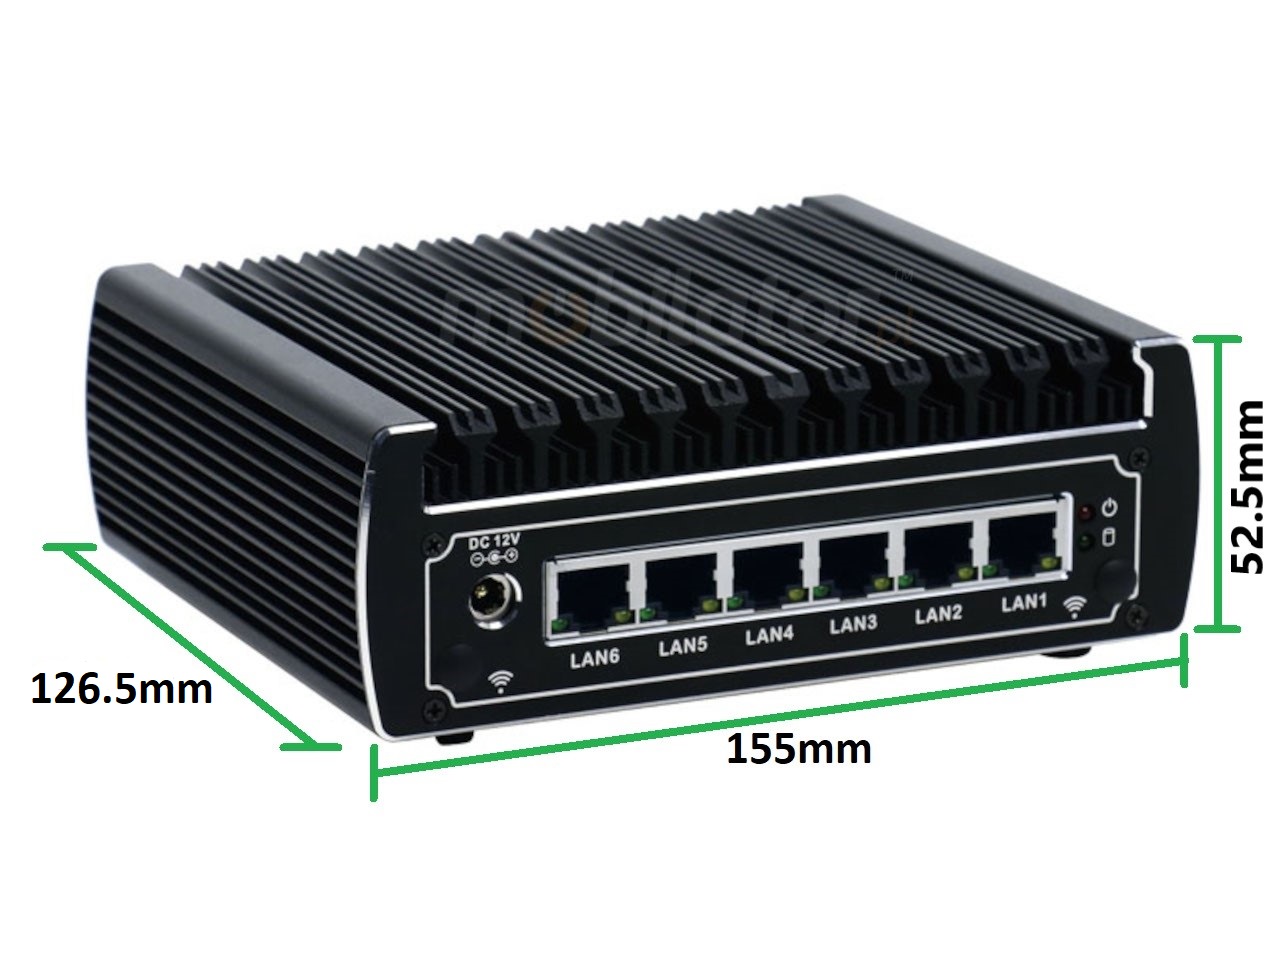   IBOX N133 v.10, wymiary SSD HDD DDR4 WIFI BLUETOOTH, przemysowy, may, szybki, niezawodny, fanless, industrial, small, LAN, INTEL i3